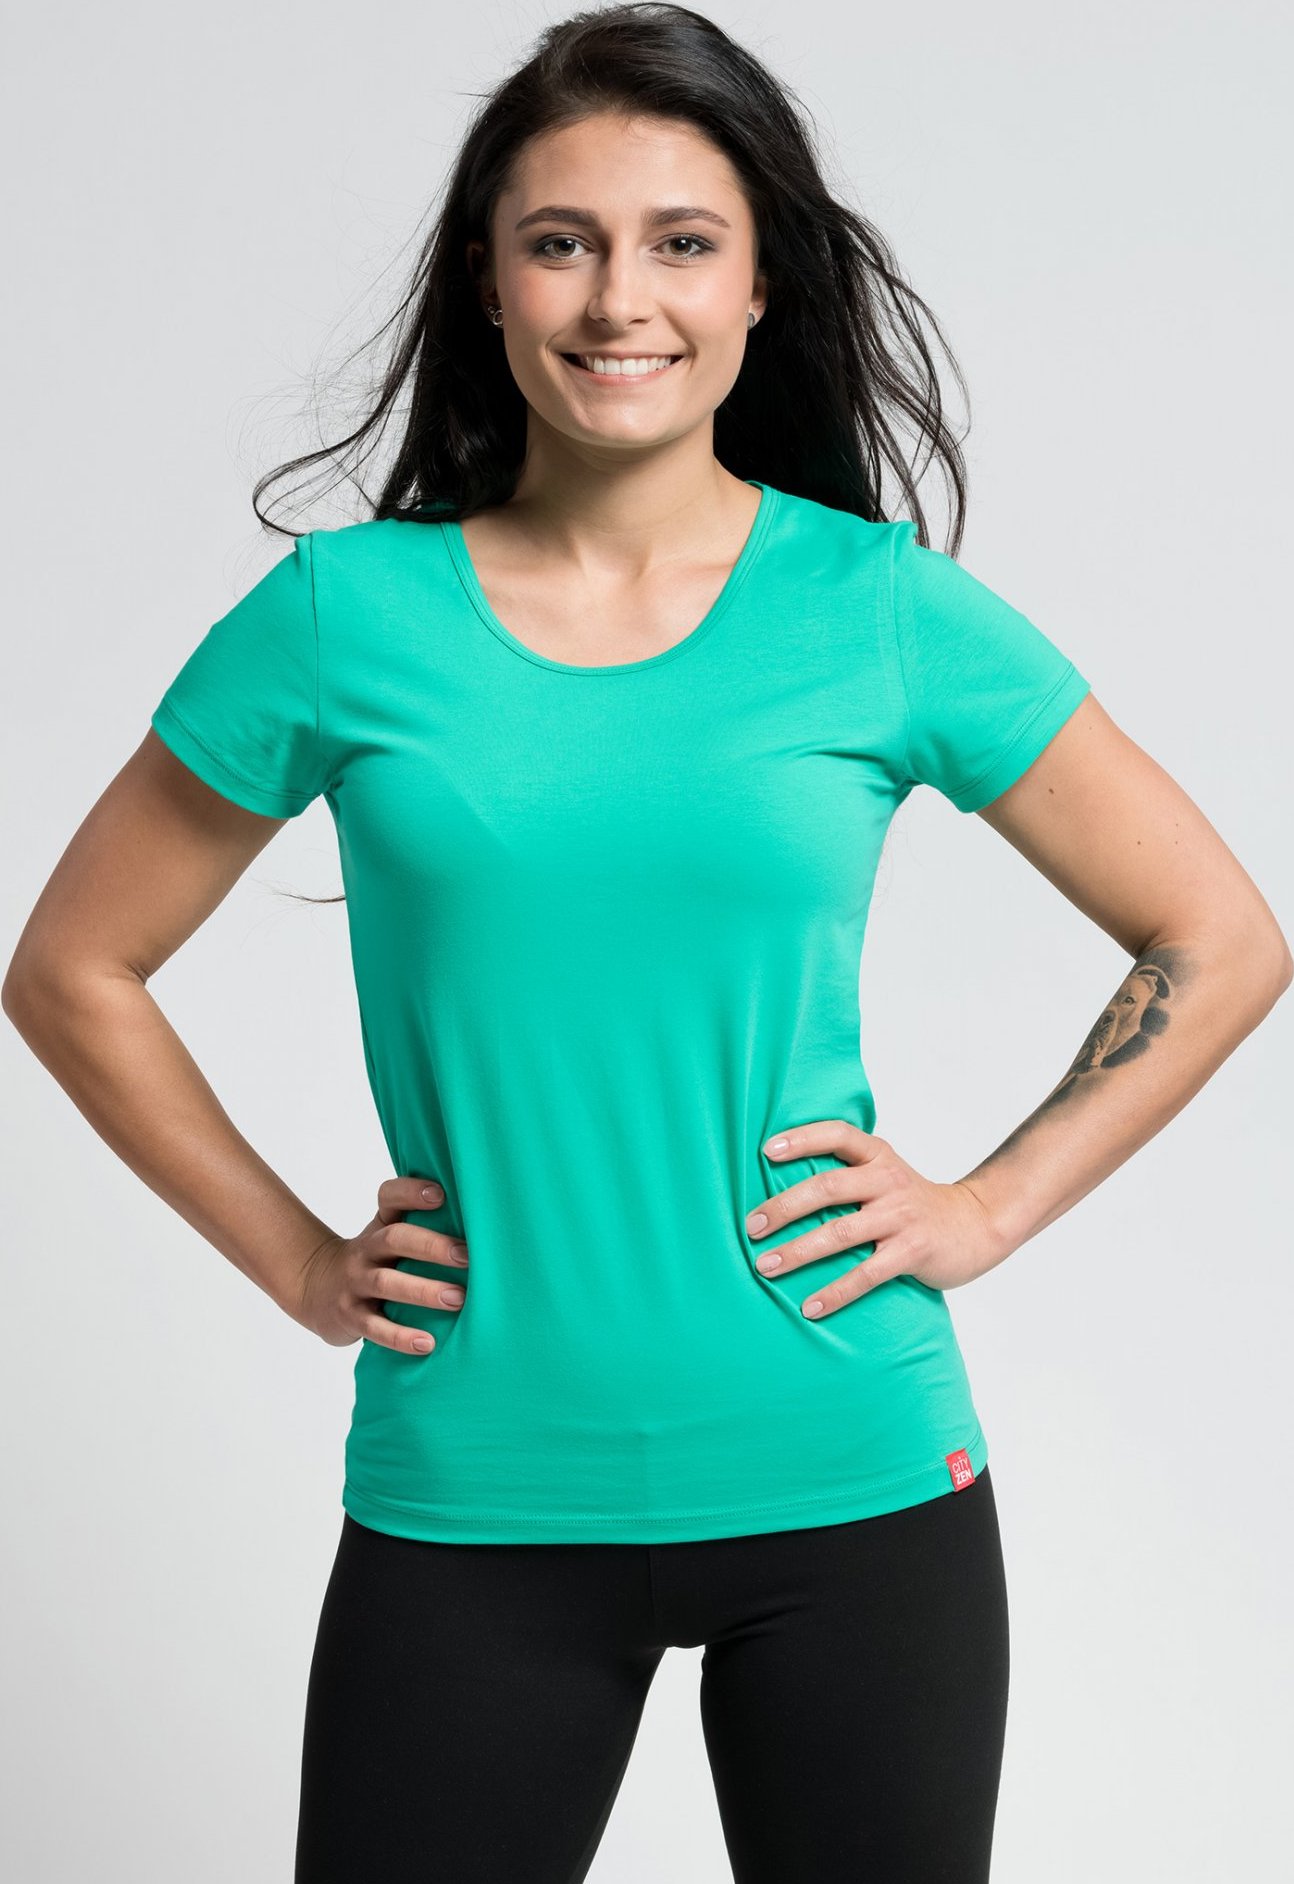 Dámské bavlněné triko CITYZEN zelené, klasické, s elastanem Velikost: XL/42